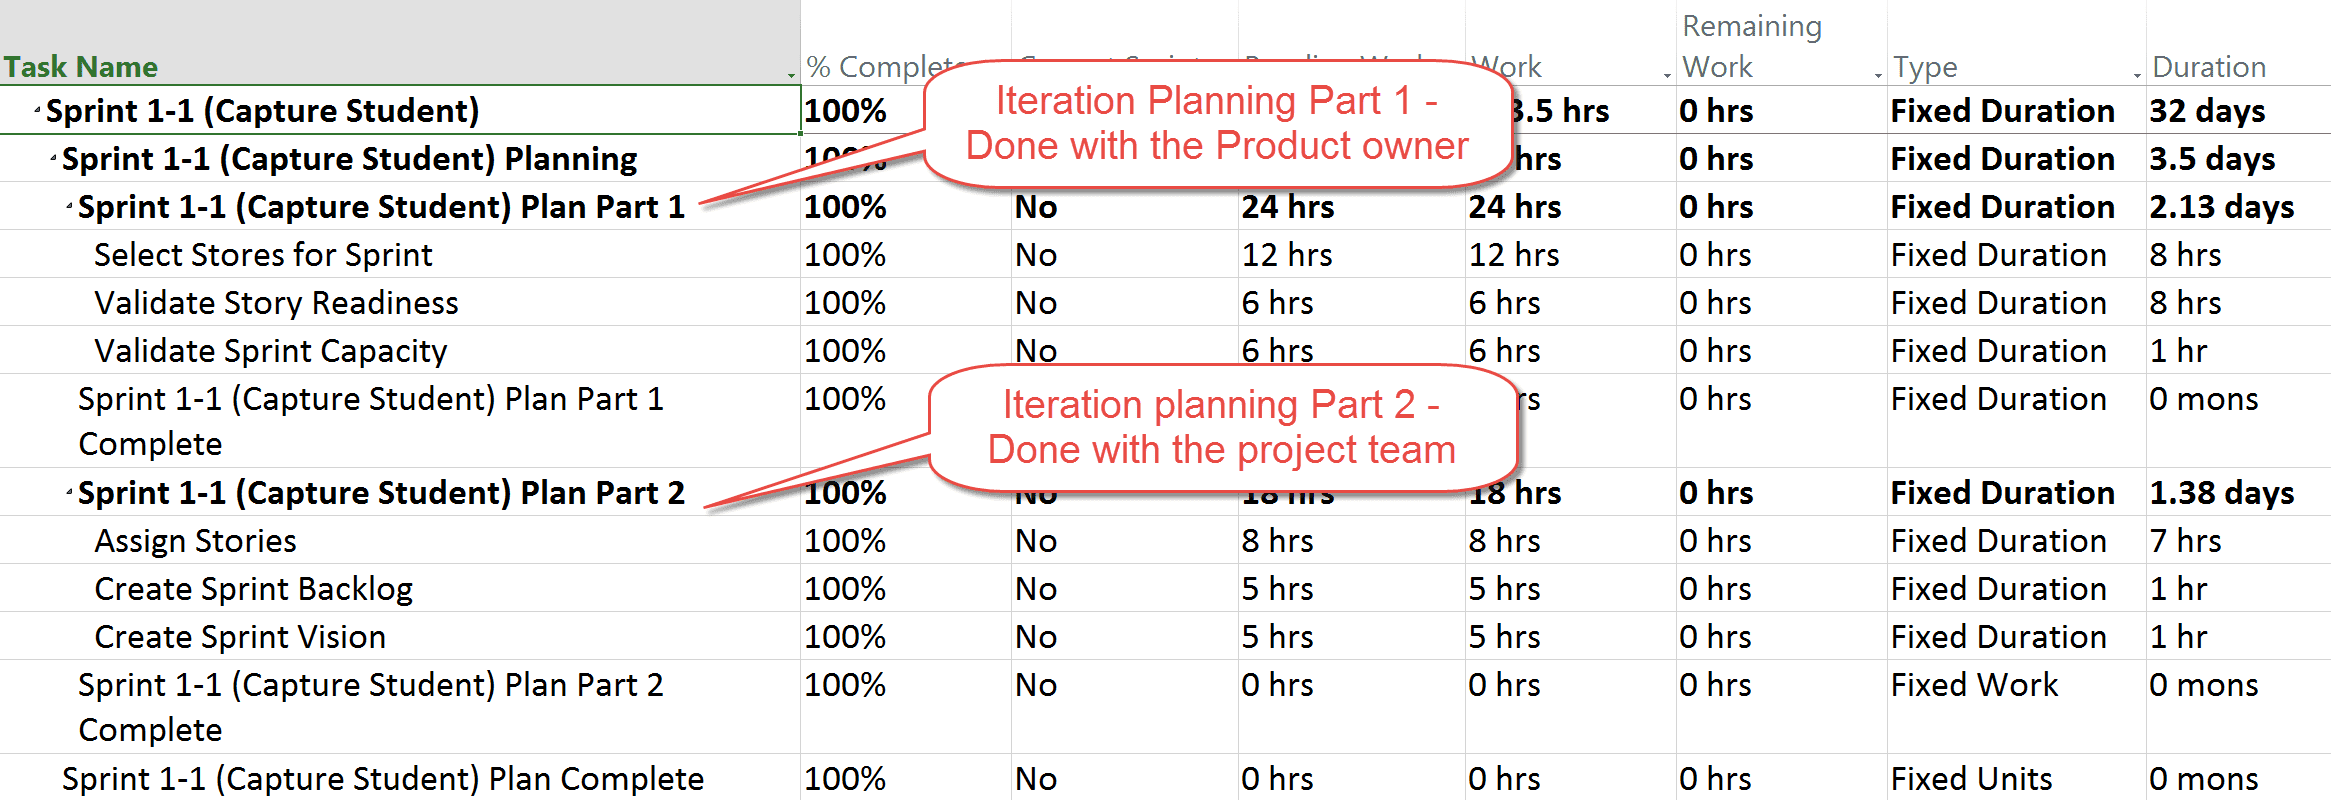 Iteration Planning